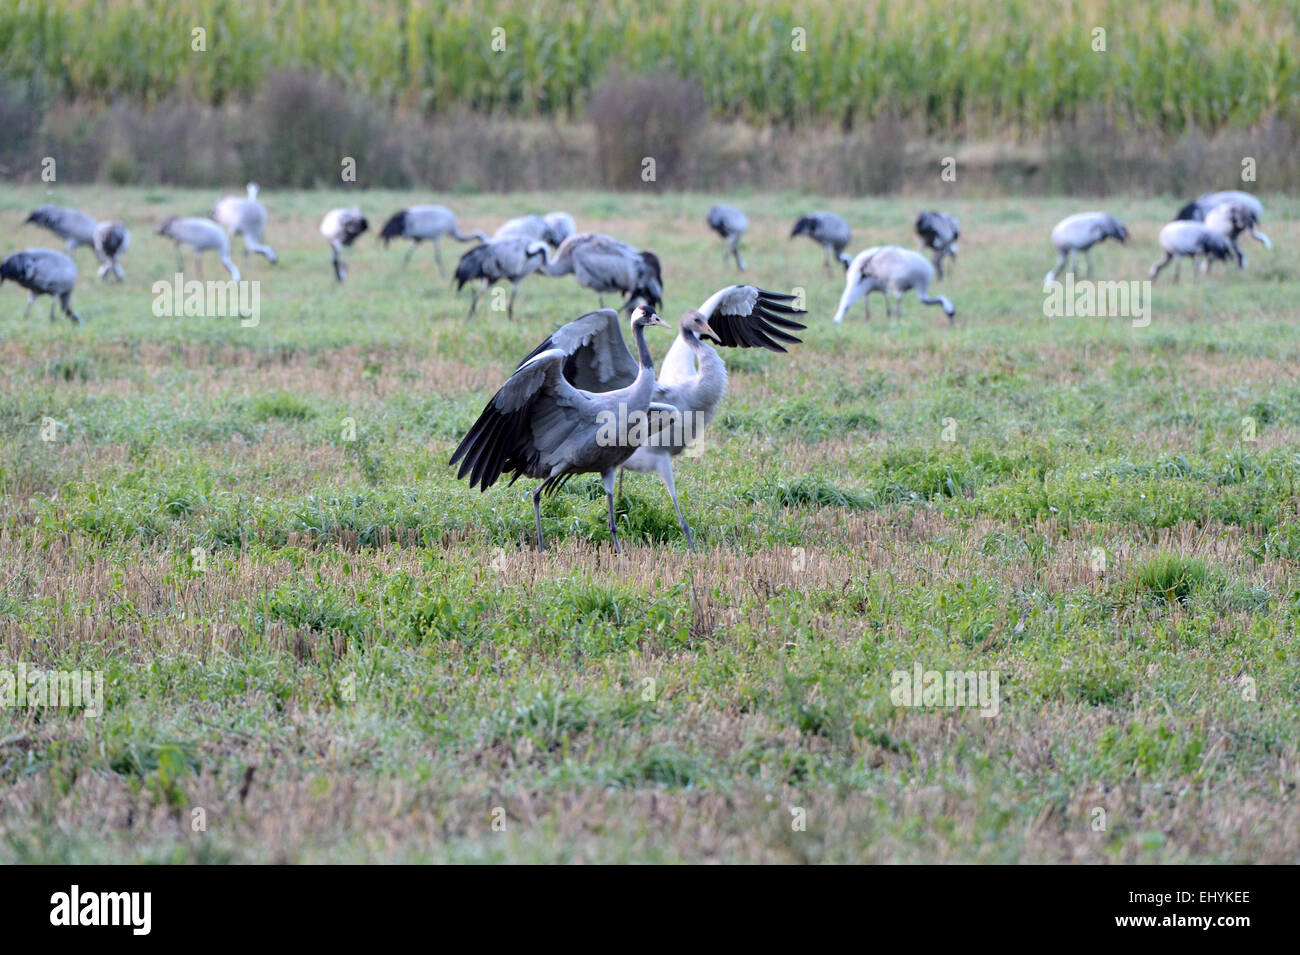 Crane, Grus grus, birds, cranes, gray cranes, wading bird, Mecklenburg-West Pomerania, bird migration, Germany Stock Photo